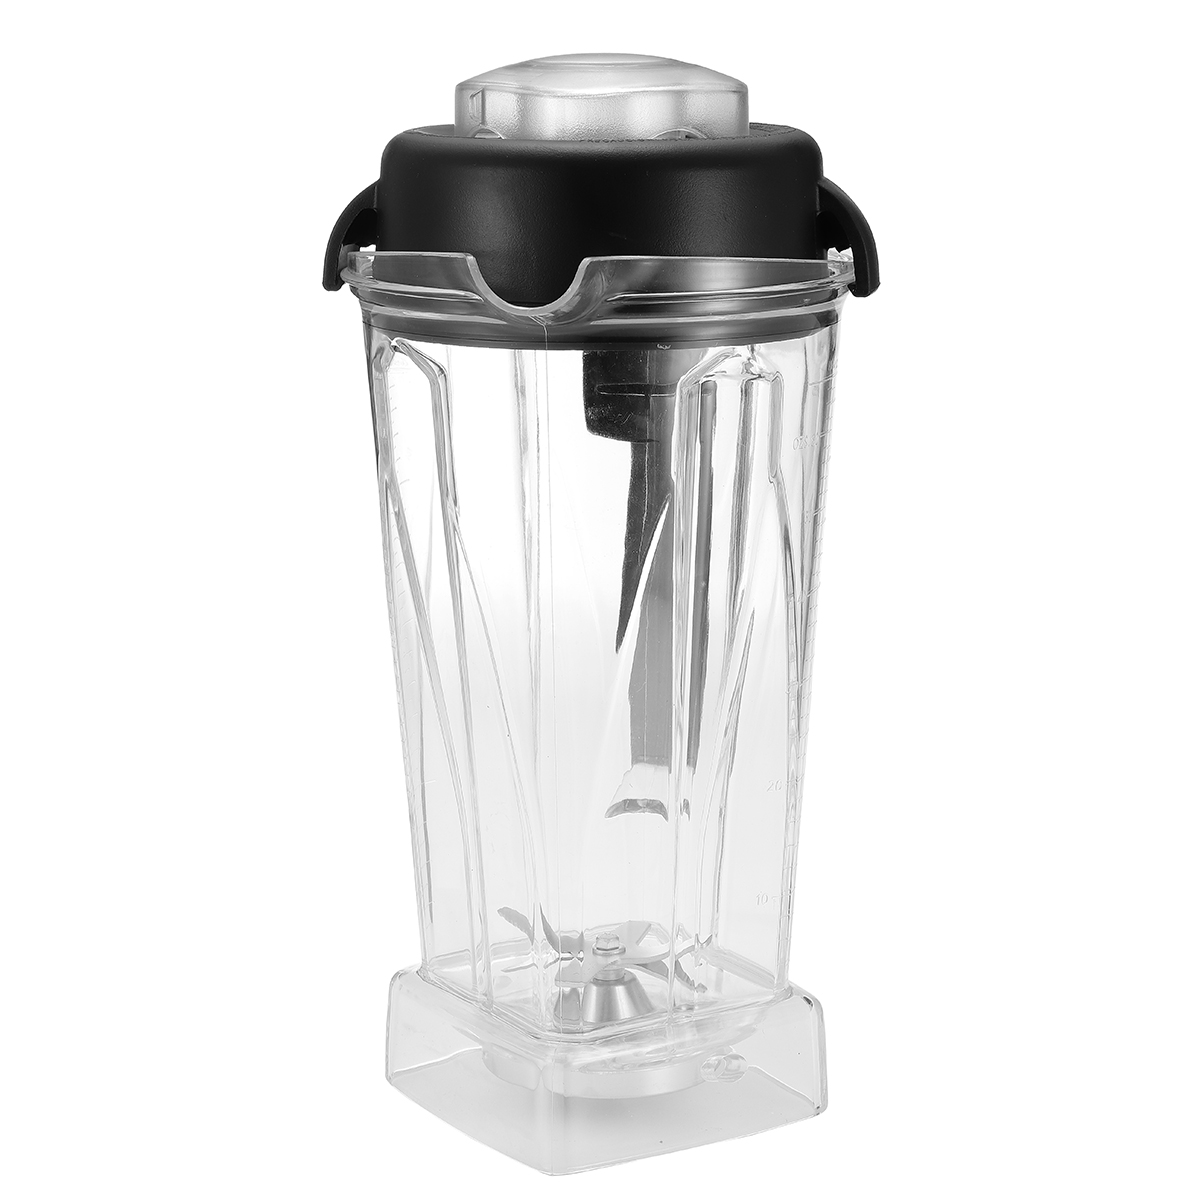 2L Container Jar Jug Pitcher Cup Commercial Blender/ Spare Parts for Vitamix 60oz Home Kitchen Appliance Food Mixer Part Durable